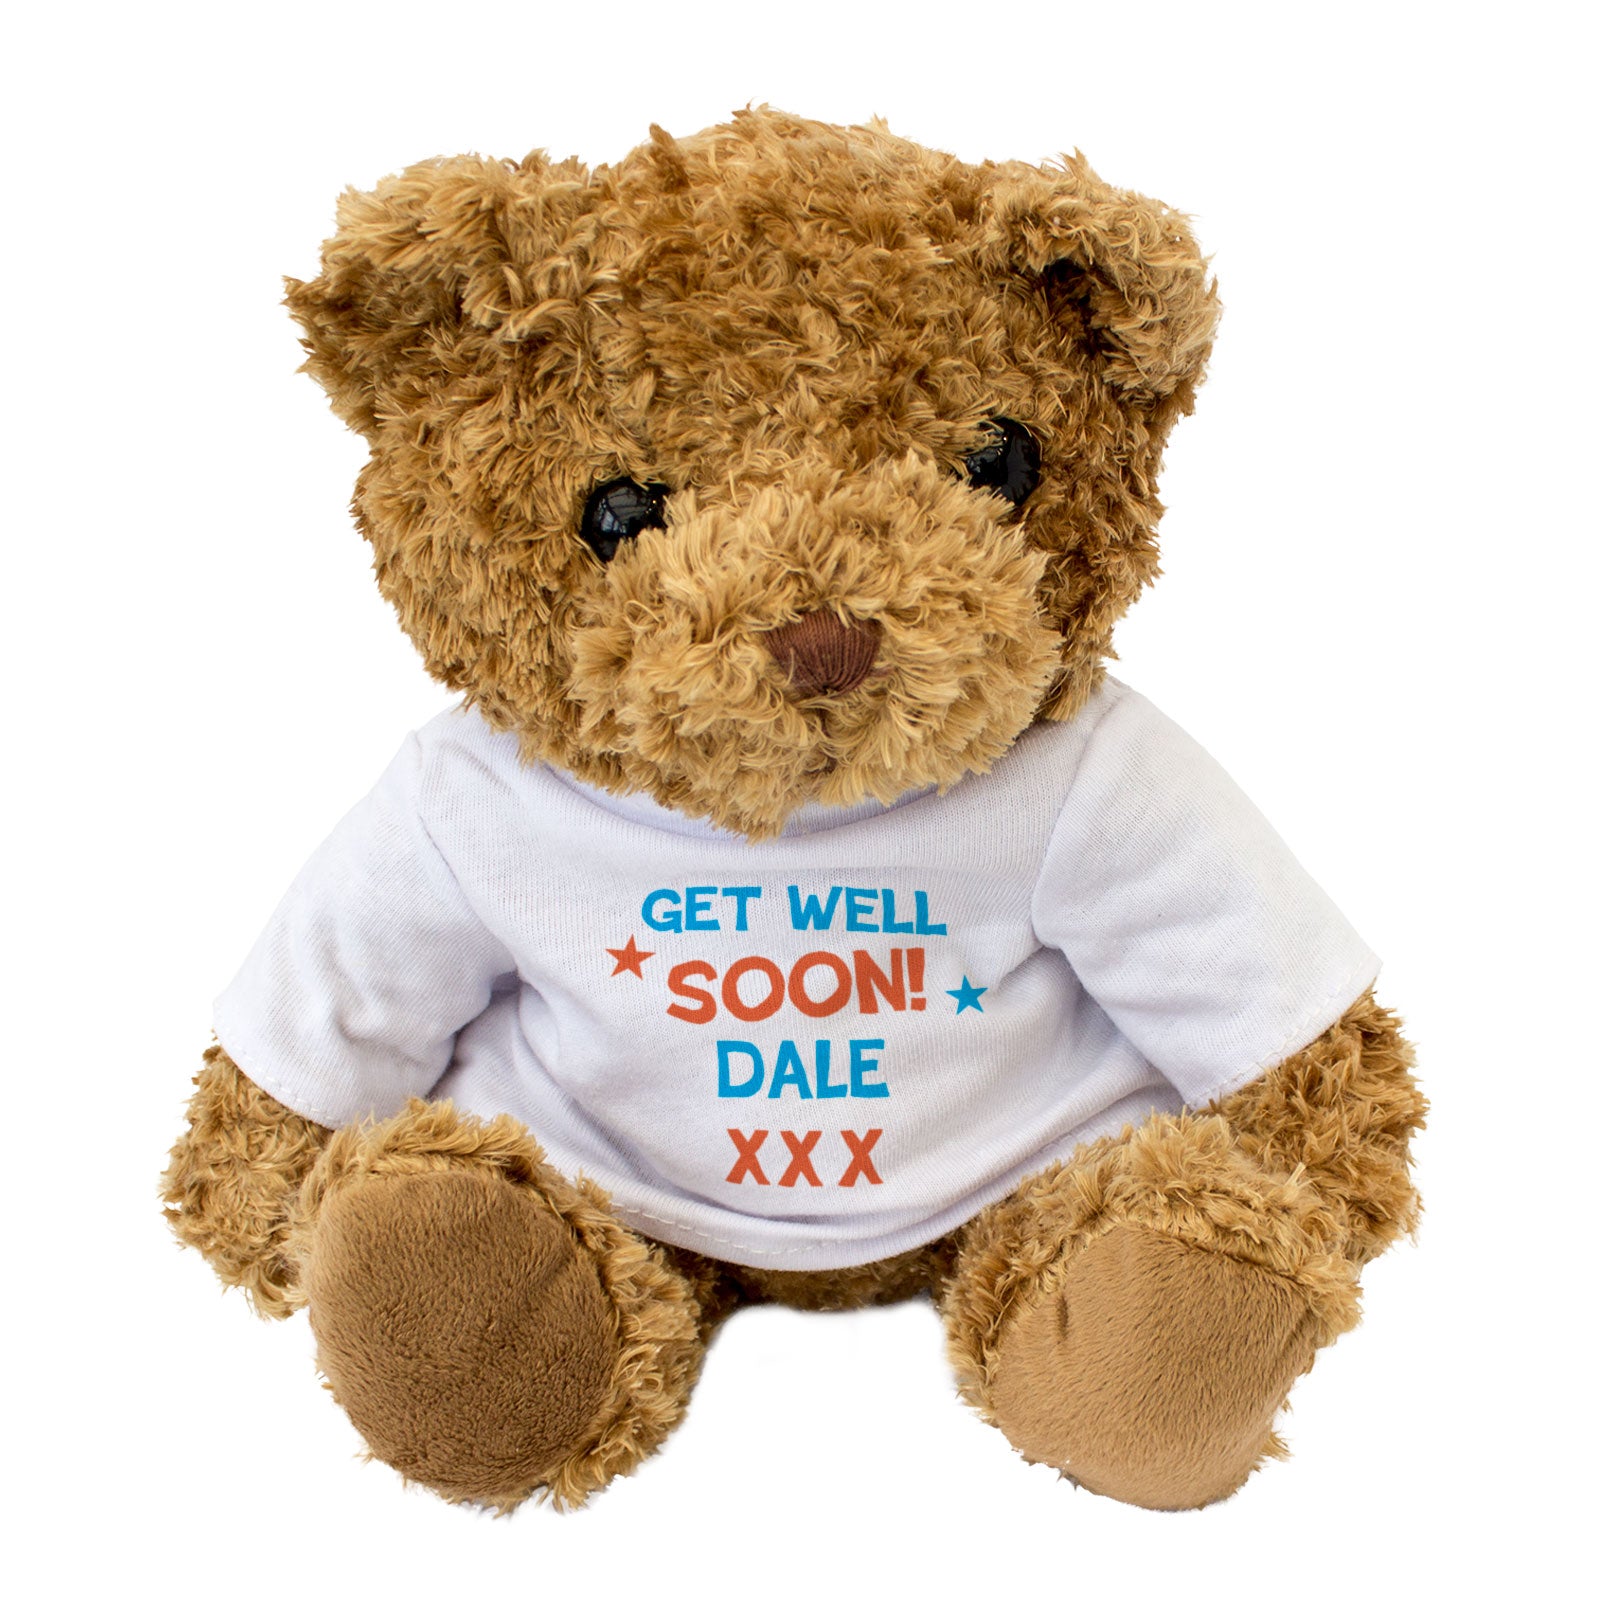 Get Well Soon Dale - Teddy Bear